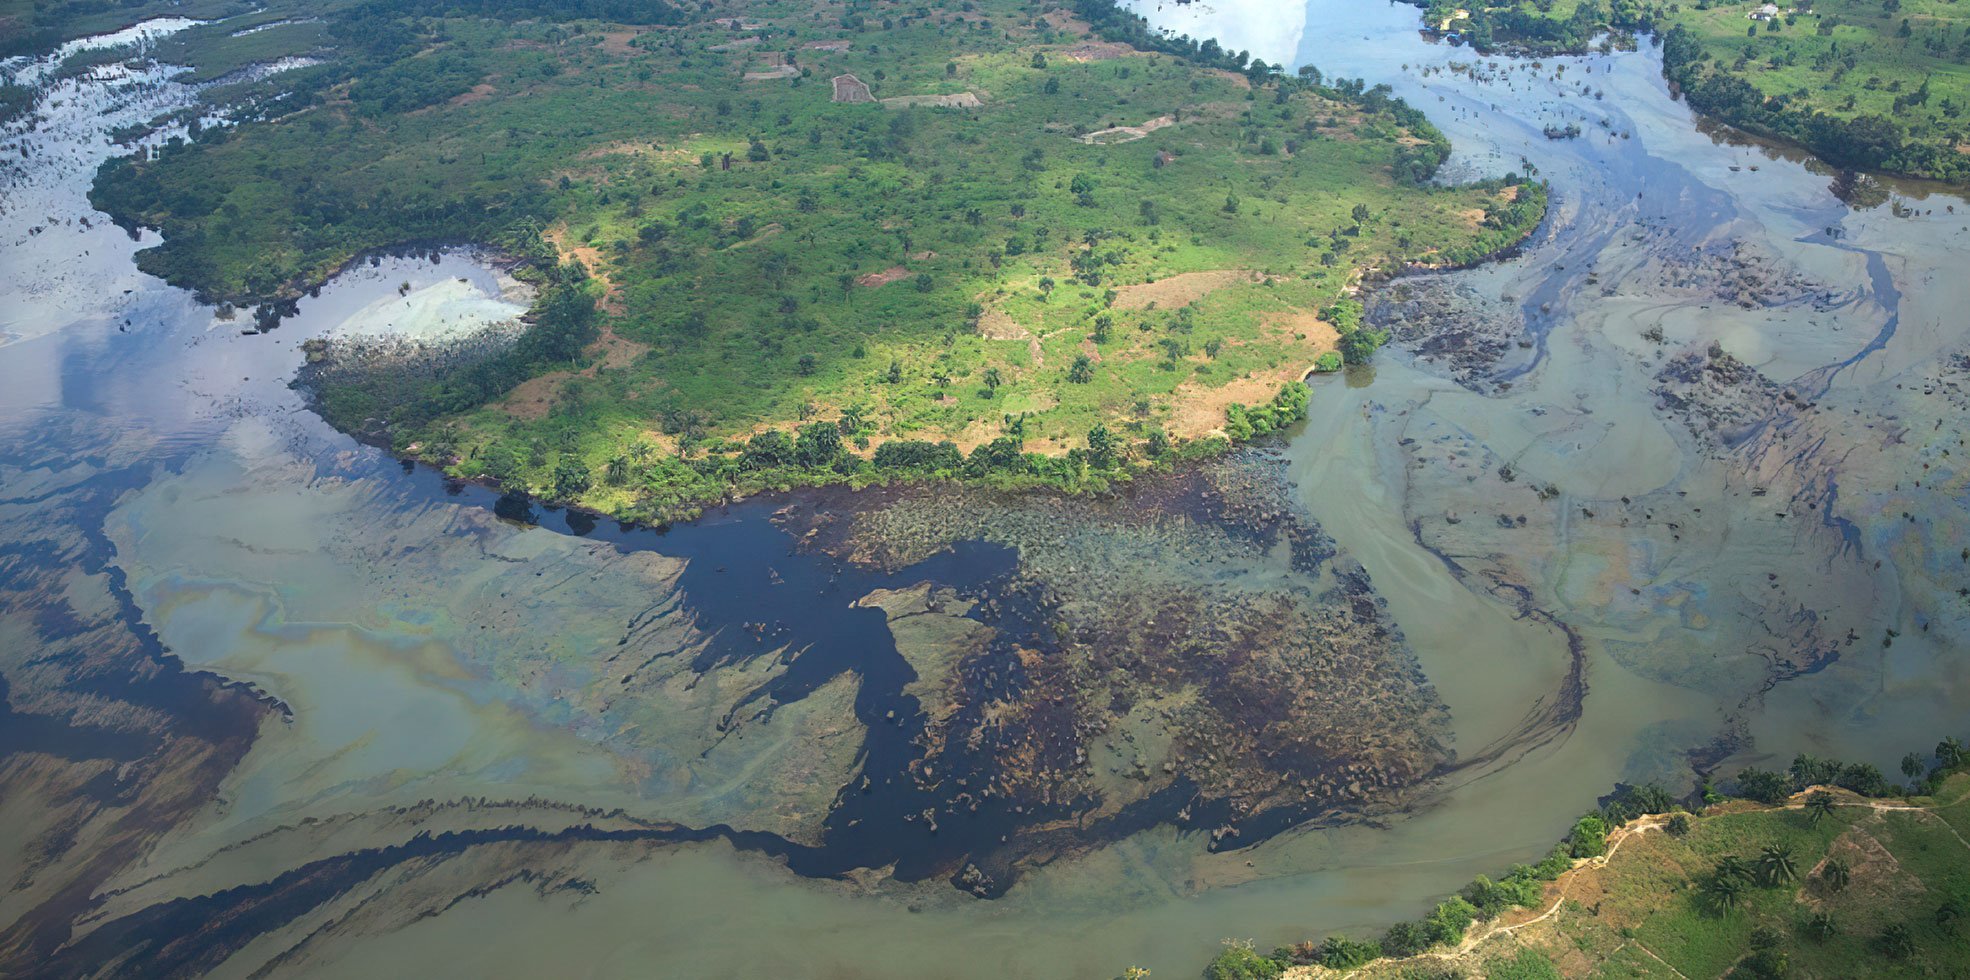 Реки и озера нигерии. Дельта реки нигер, Нигерия — разливы нефти.. Дельта реки нигер. Река нигер в Нигерии. Дельта реки нигер нефть.